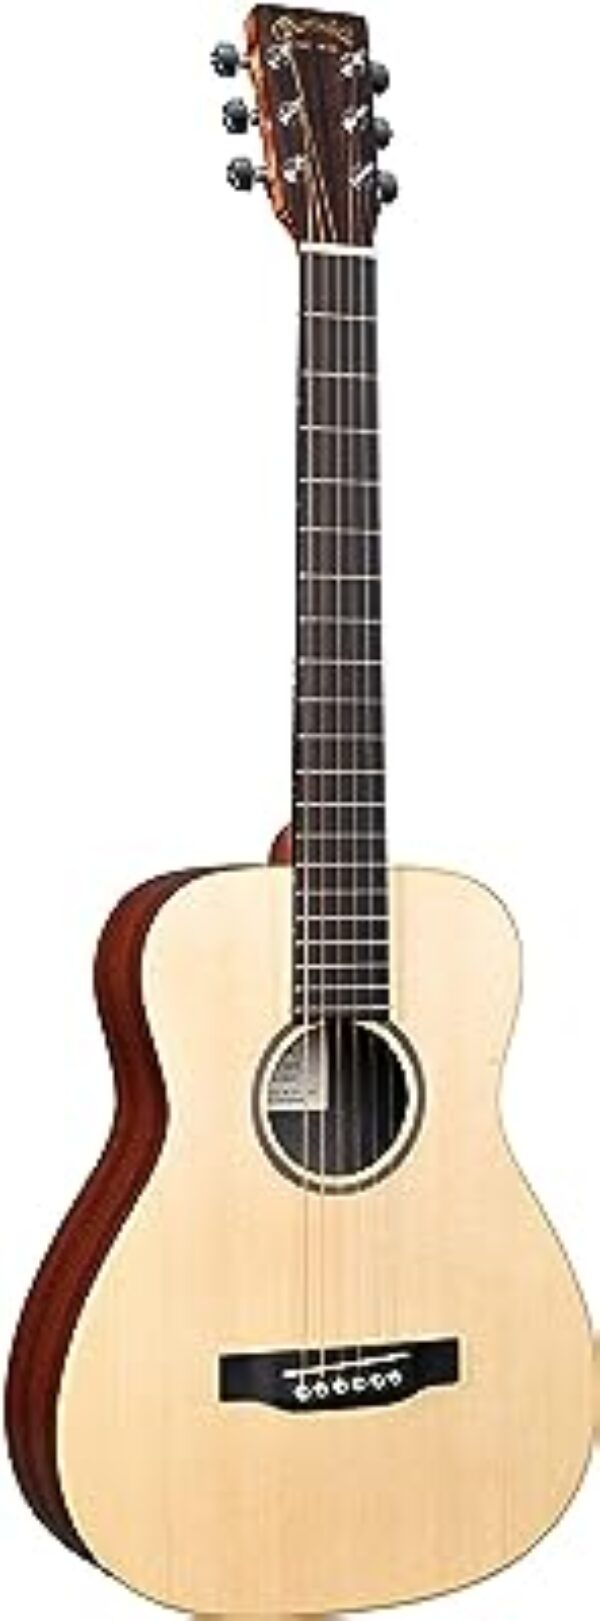 Martin LX1E Acoustic/Electric Guitar